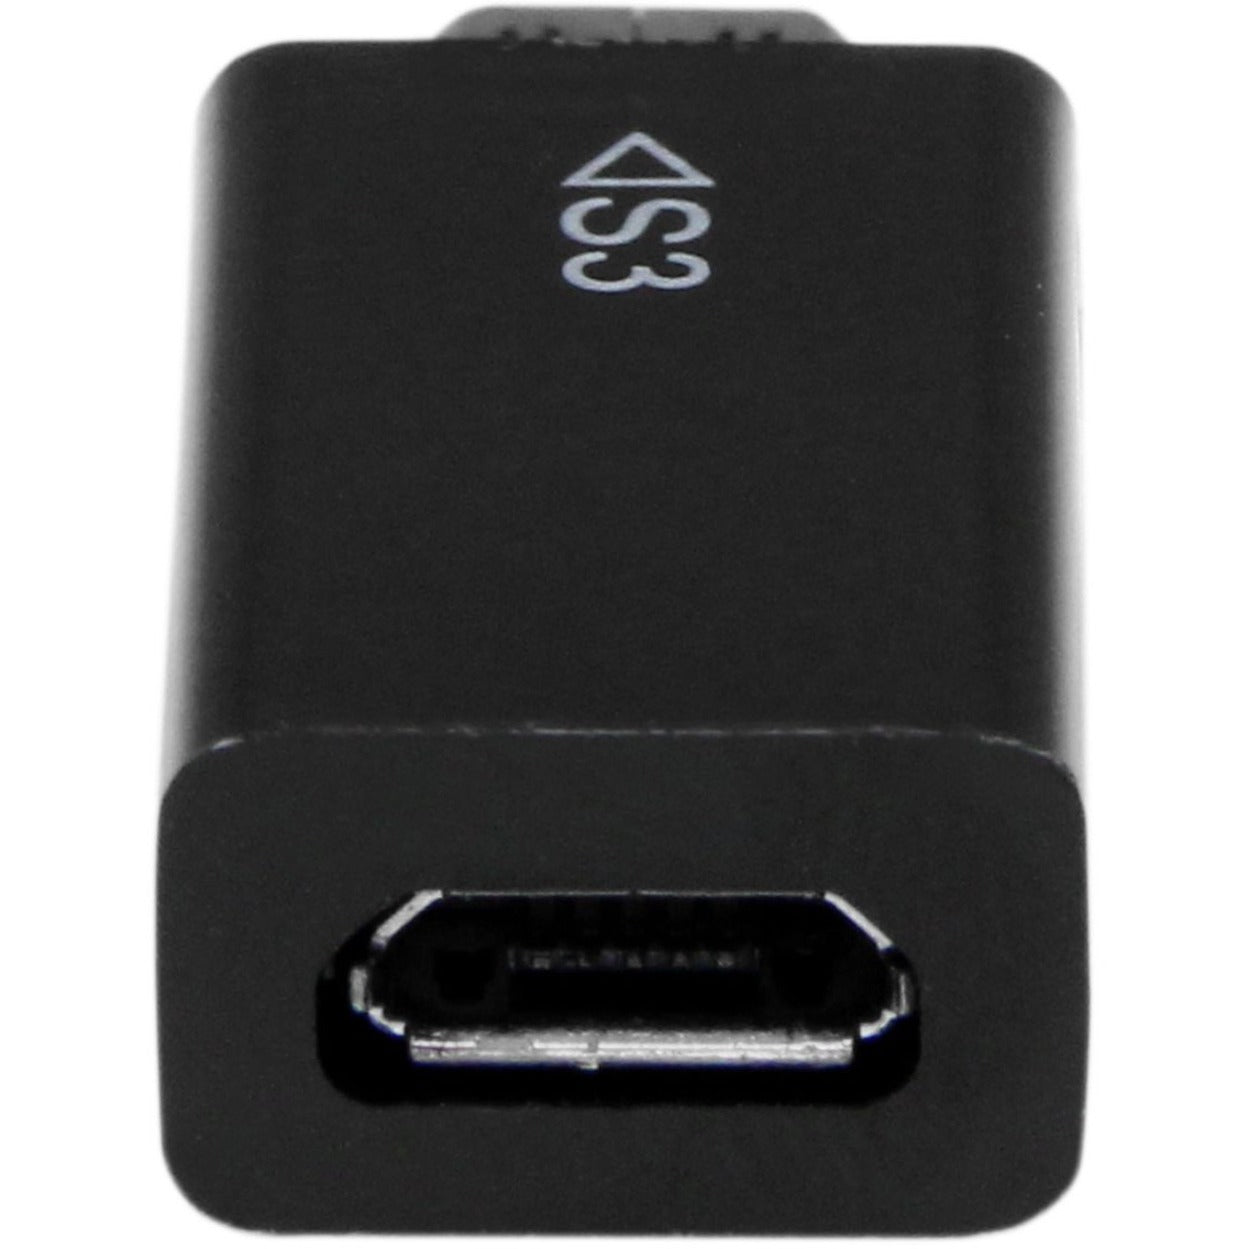 Adaptateur StarTech.com S3MHADAP Micro USB 5 broches vers 11 broches MHL pour Samsung Transfert de données facile pour Galaxy S3 S2 Note 2